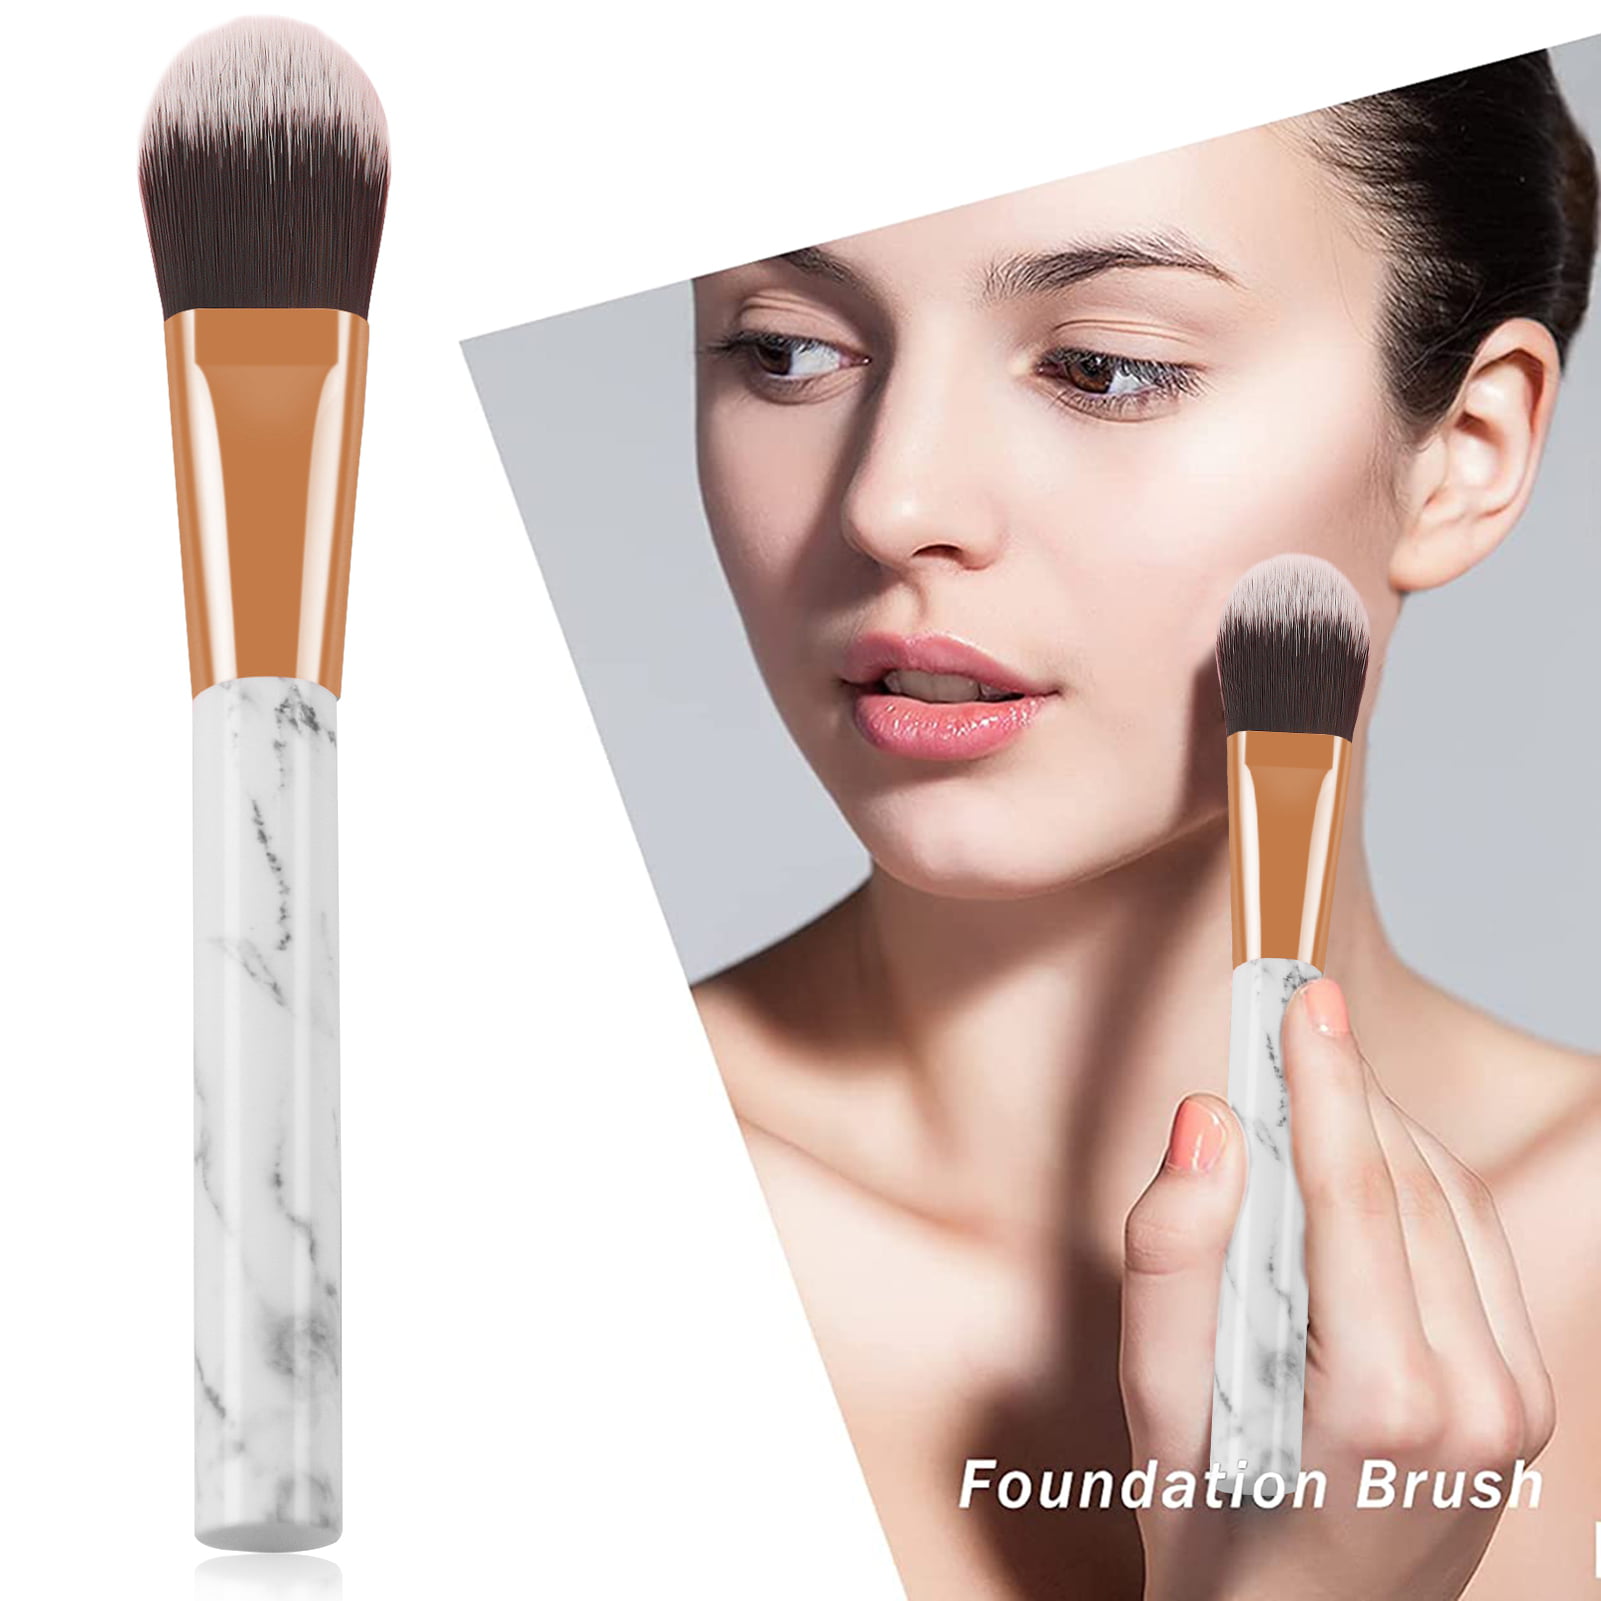 1pc Travel Makeup Brush Holder, Portable Modern Silicone Makeup Brush Holder,  Soft Stylish Makeup Tool